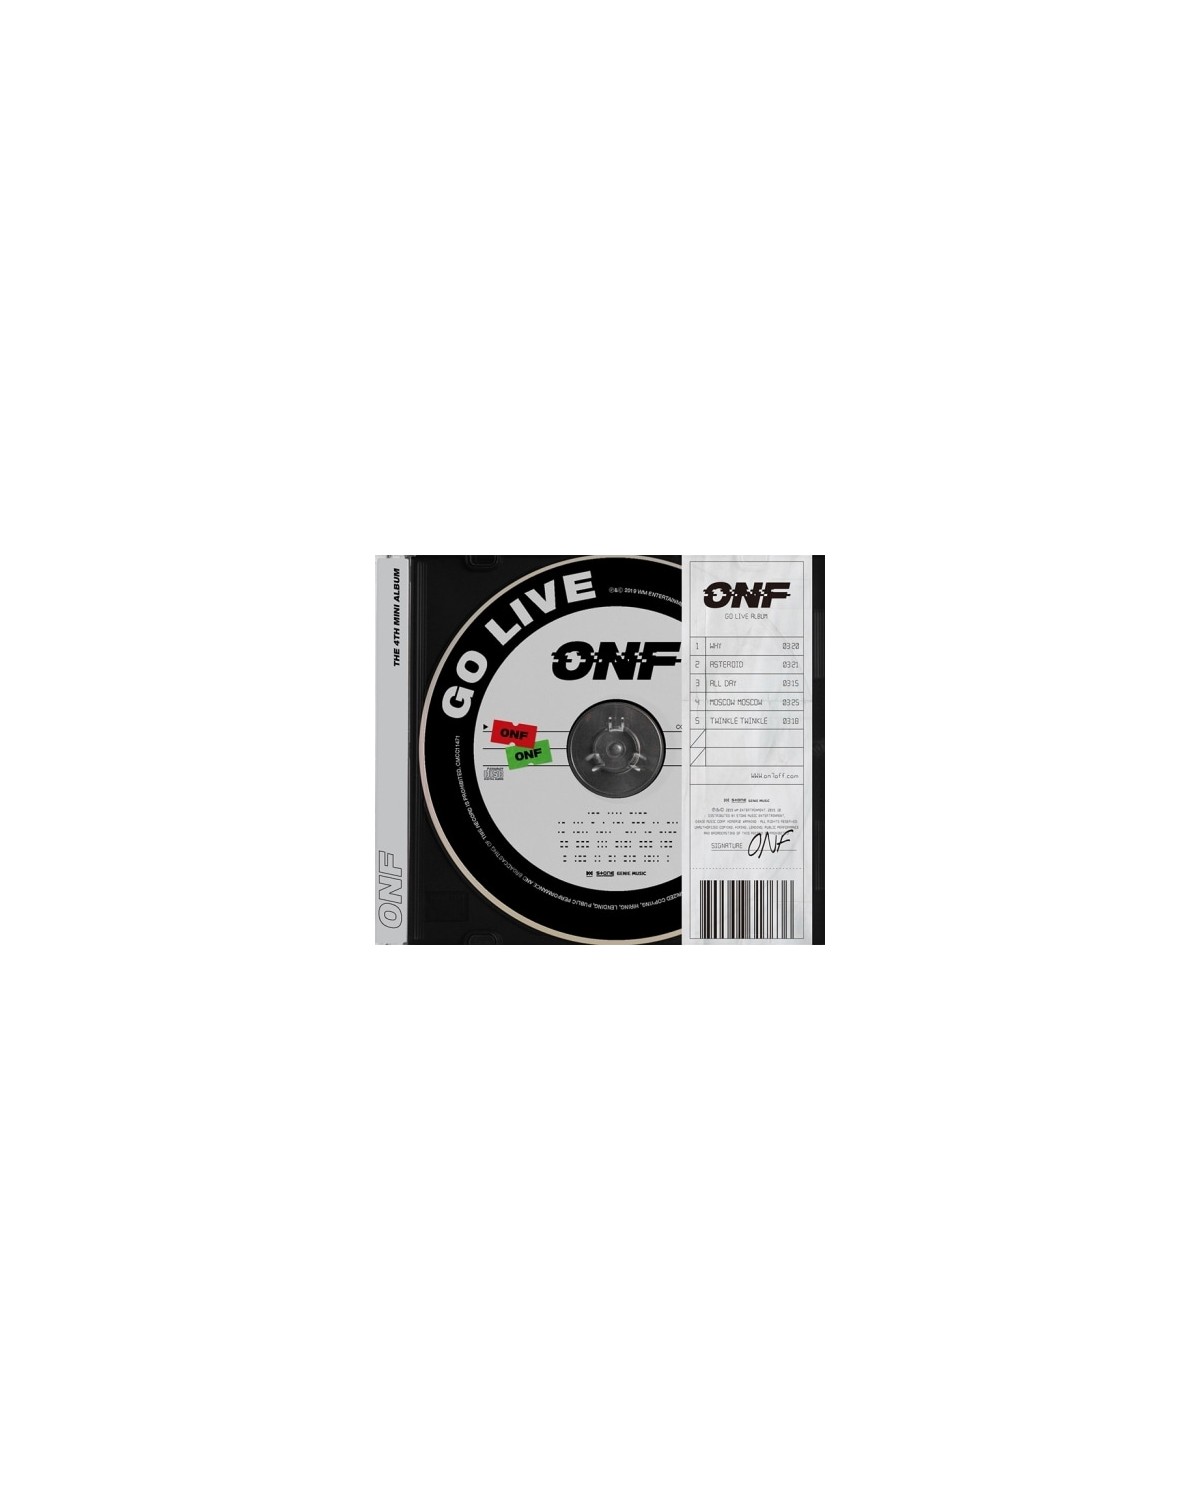 ONF - GO LIVE (4TH MINI ALBUM)
album płyta sklep kpop